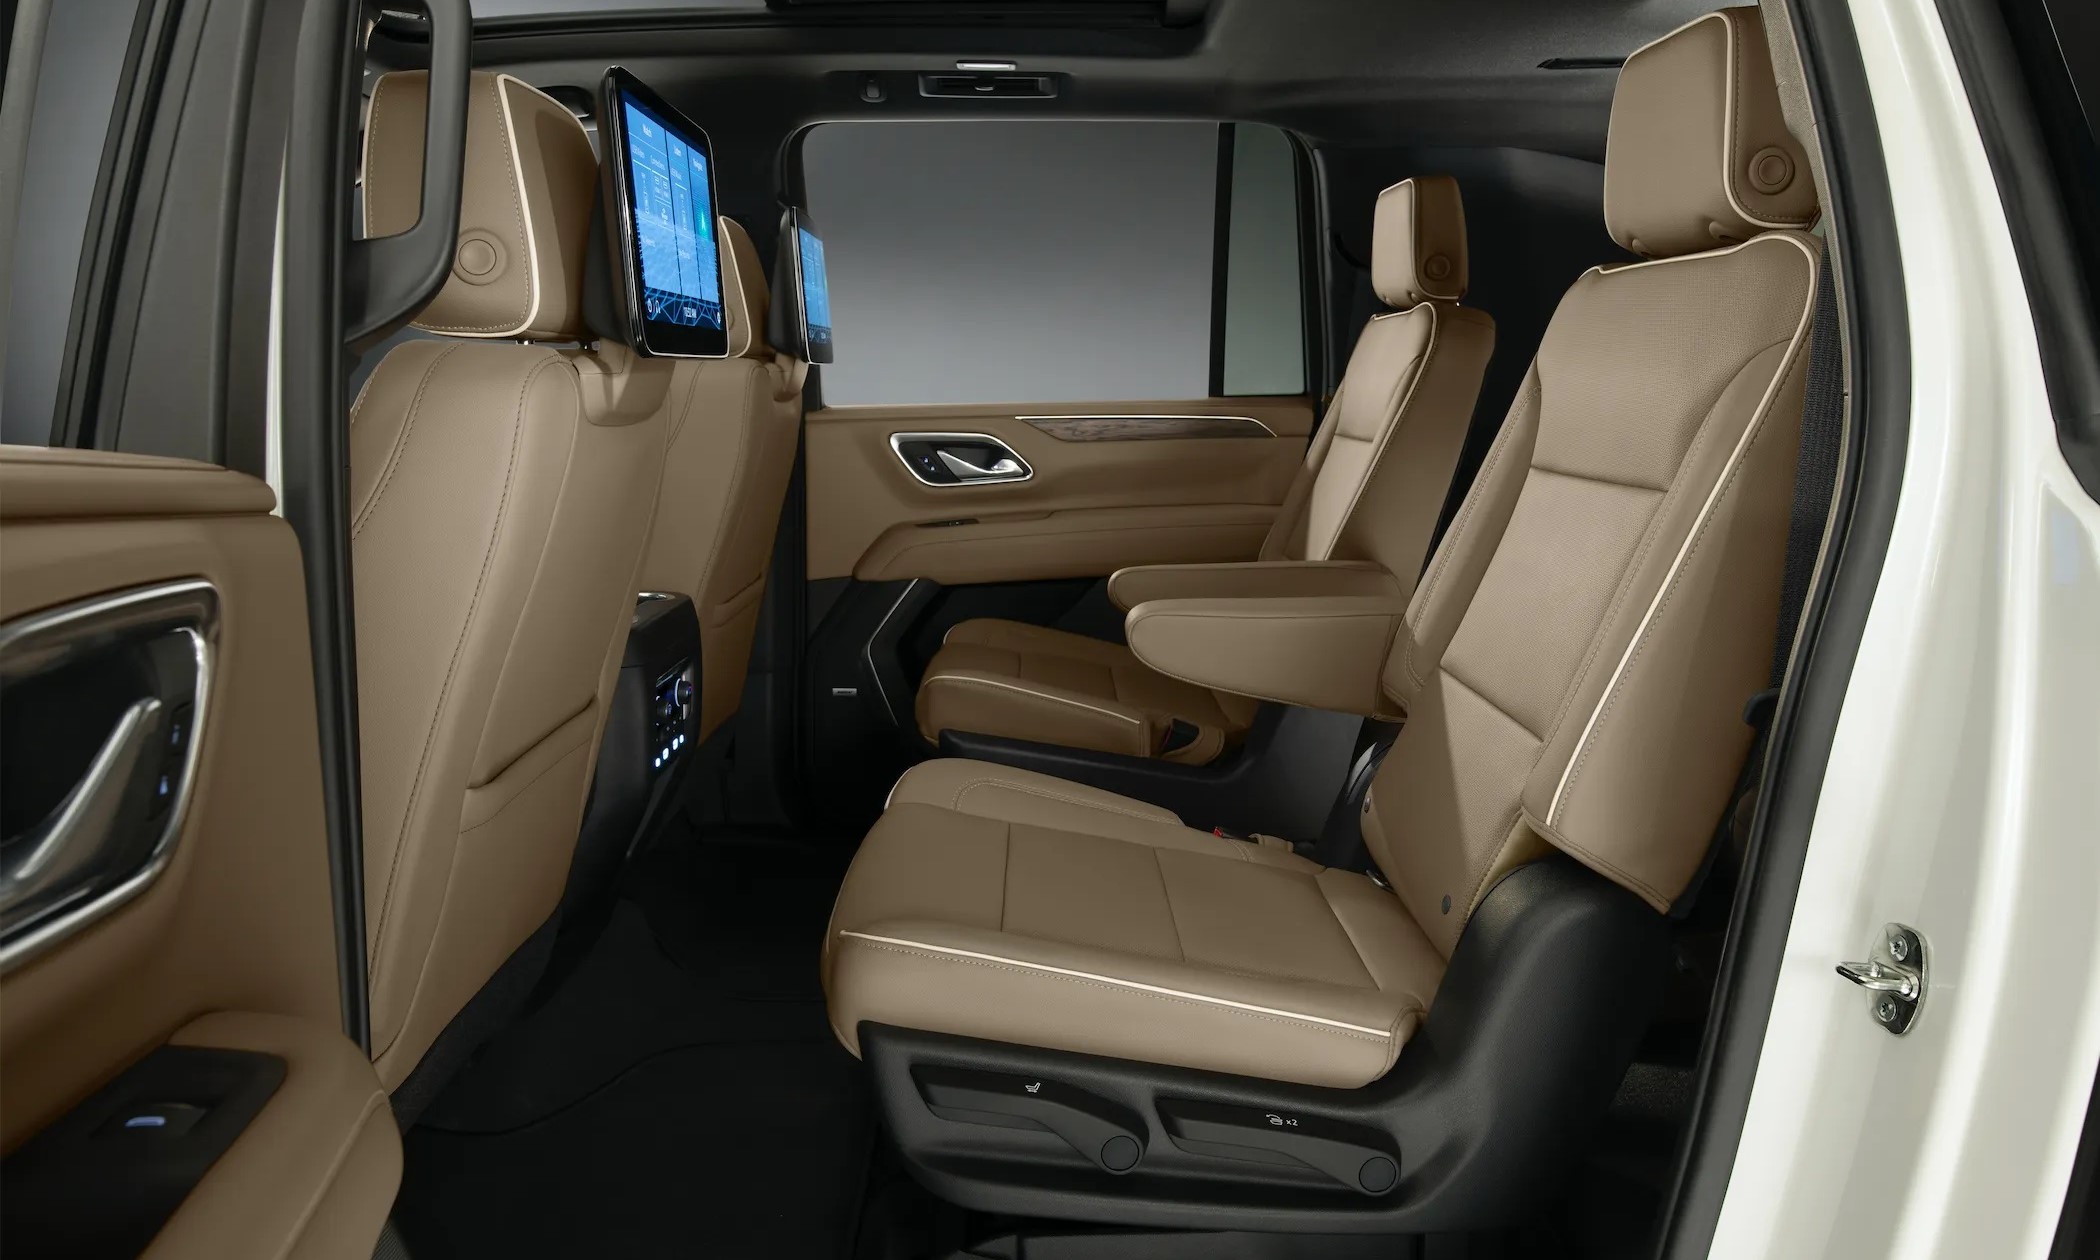 Chevrolet Suburban interior